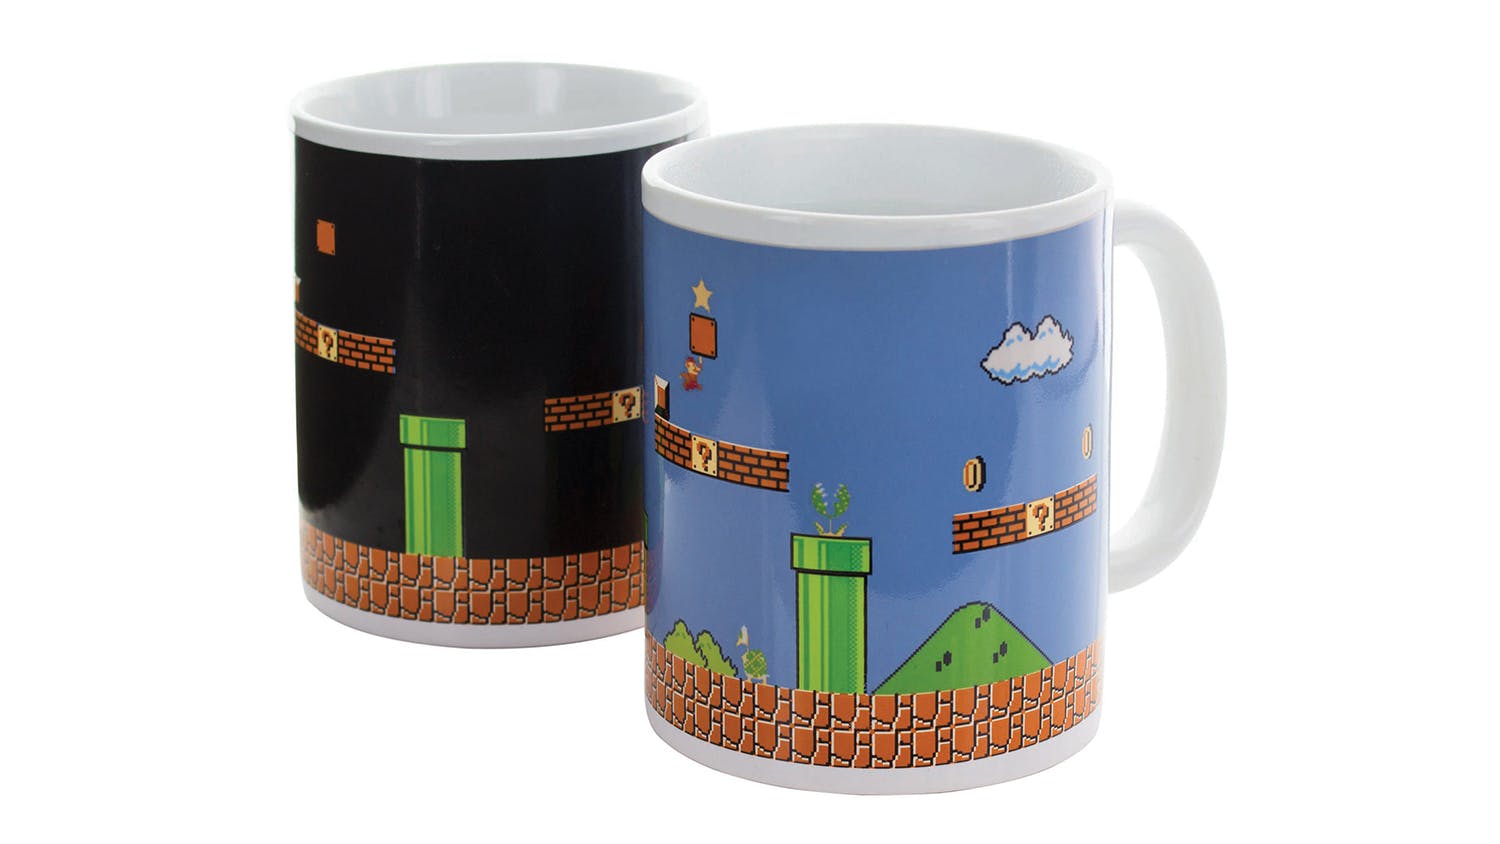 Paladone Novelty Heat-Reactive Mug - Super Mario Bros.